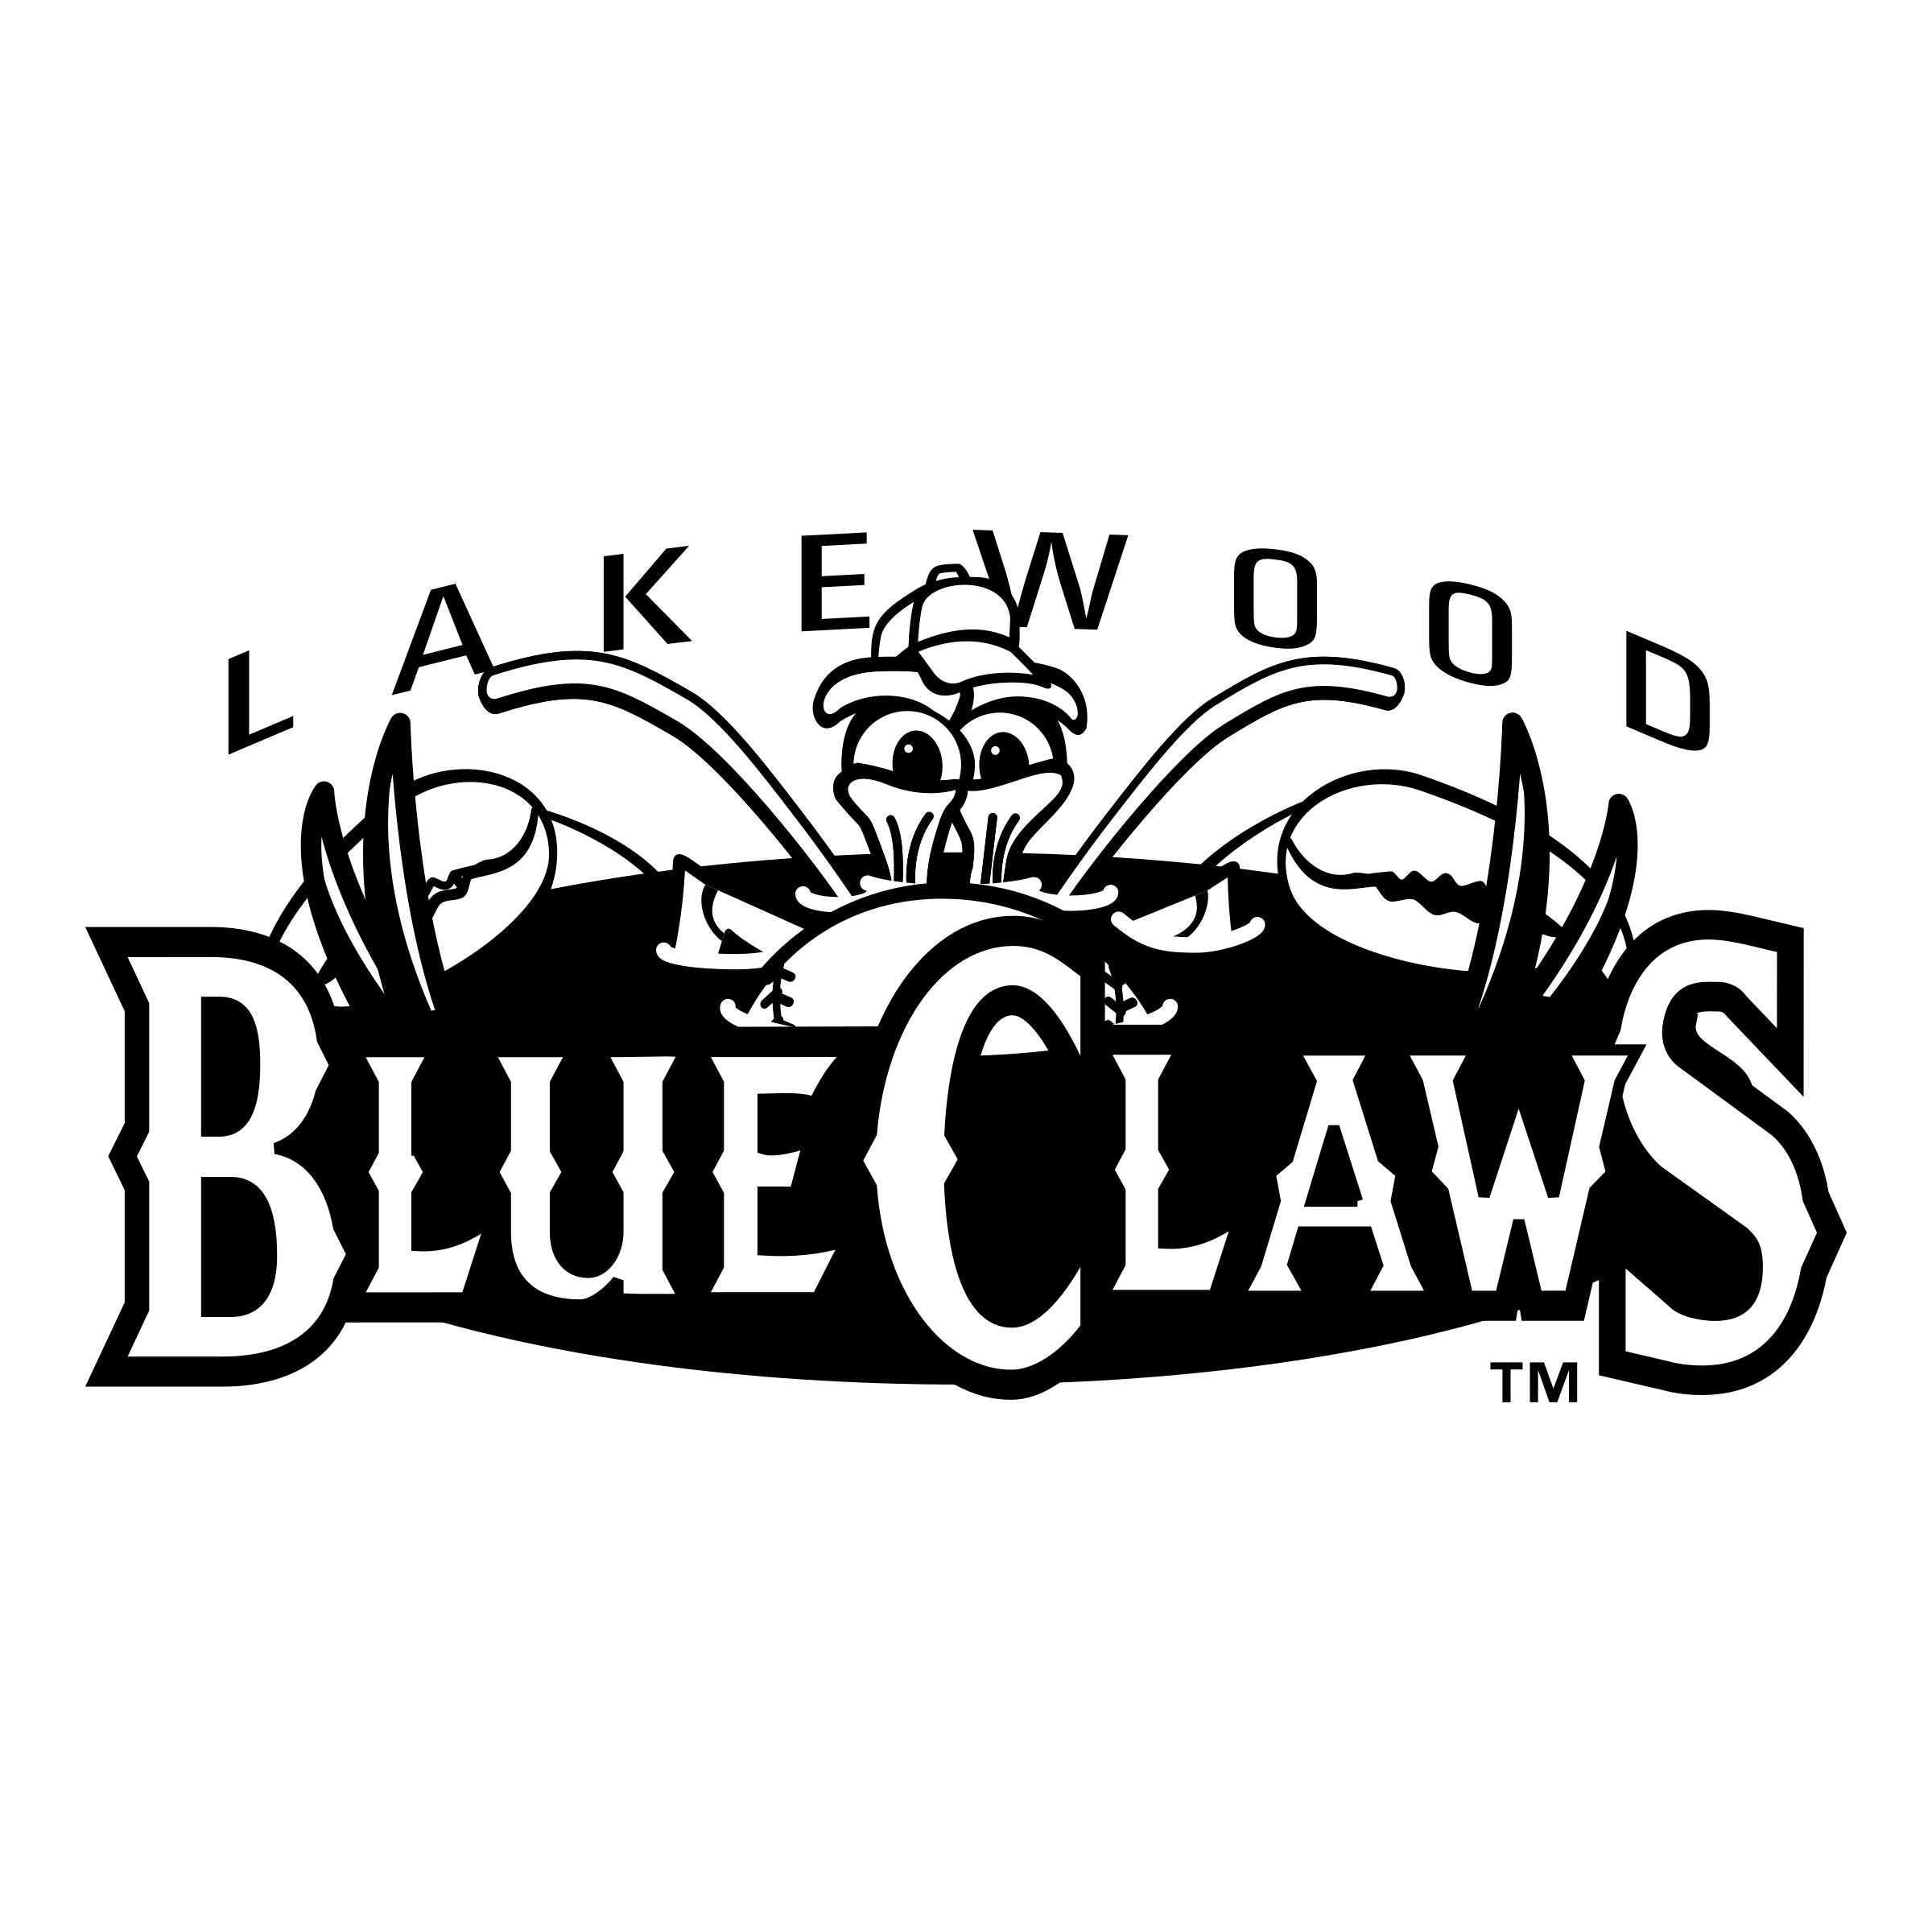 Lakewood Logo - Lakewood BlueClaws Logo PNG Transparent & SVG Vector - Freebie Supply